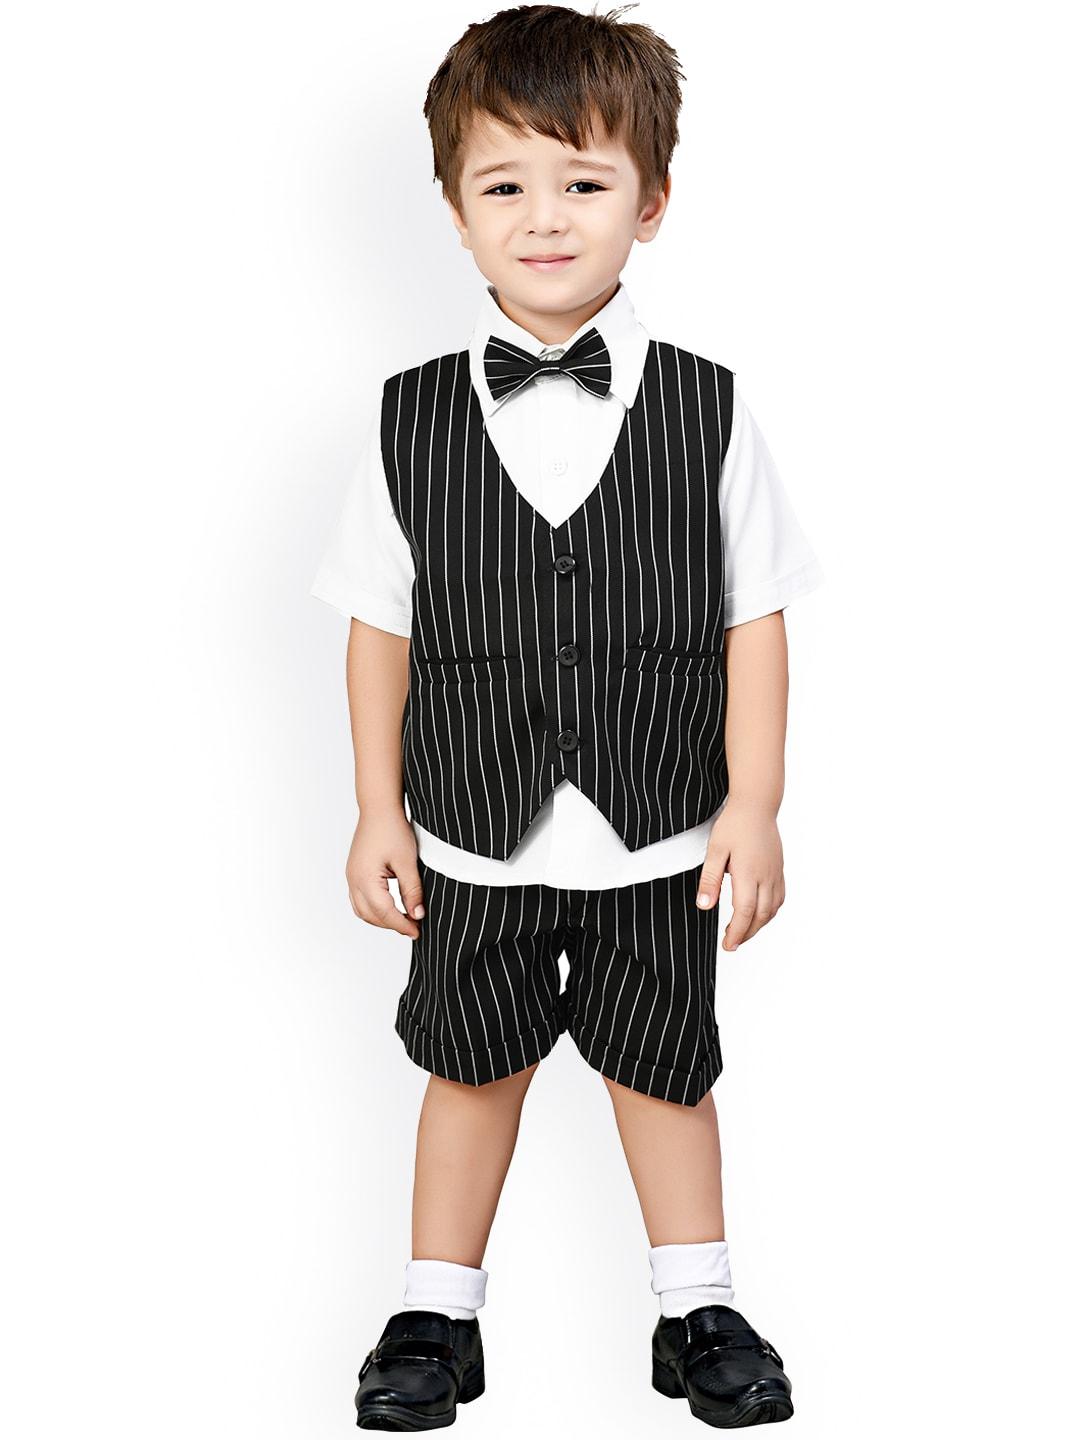 Jeetethnics Boys Black & White Striped Shirt with Shorts